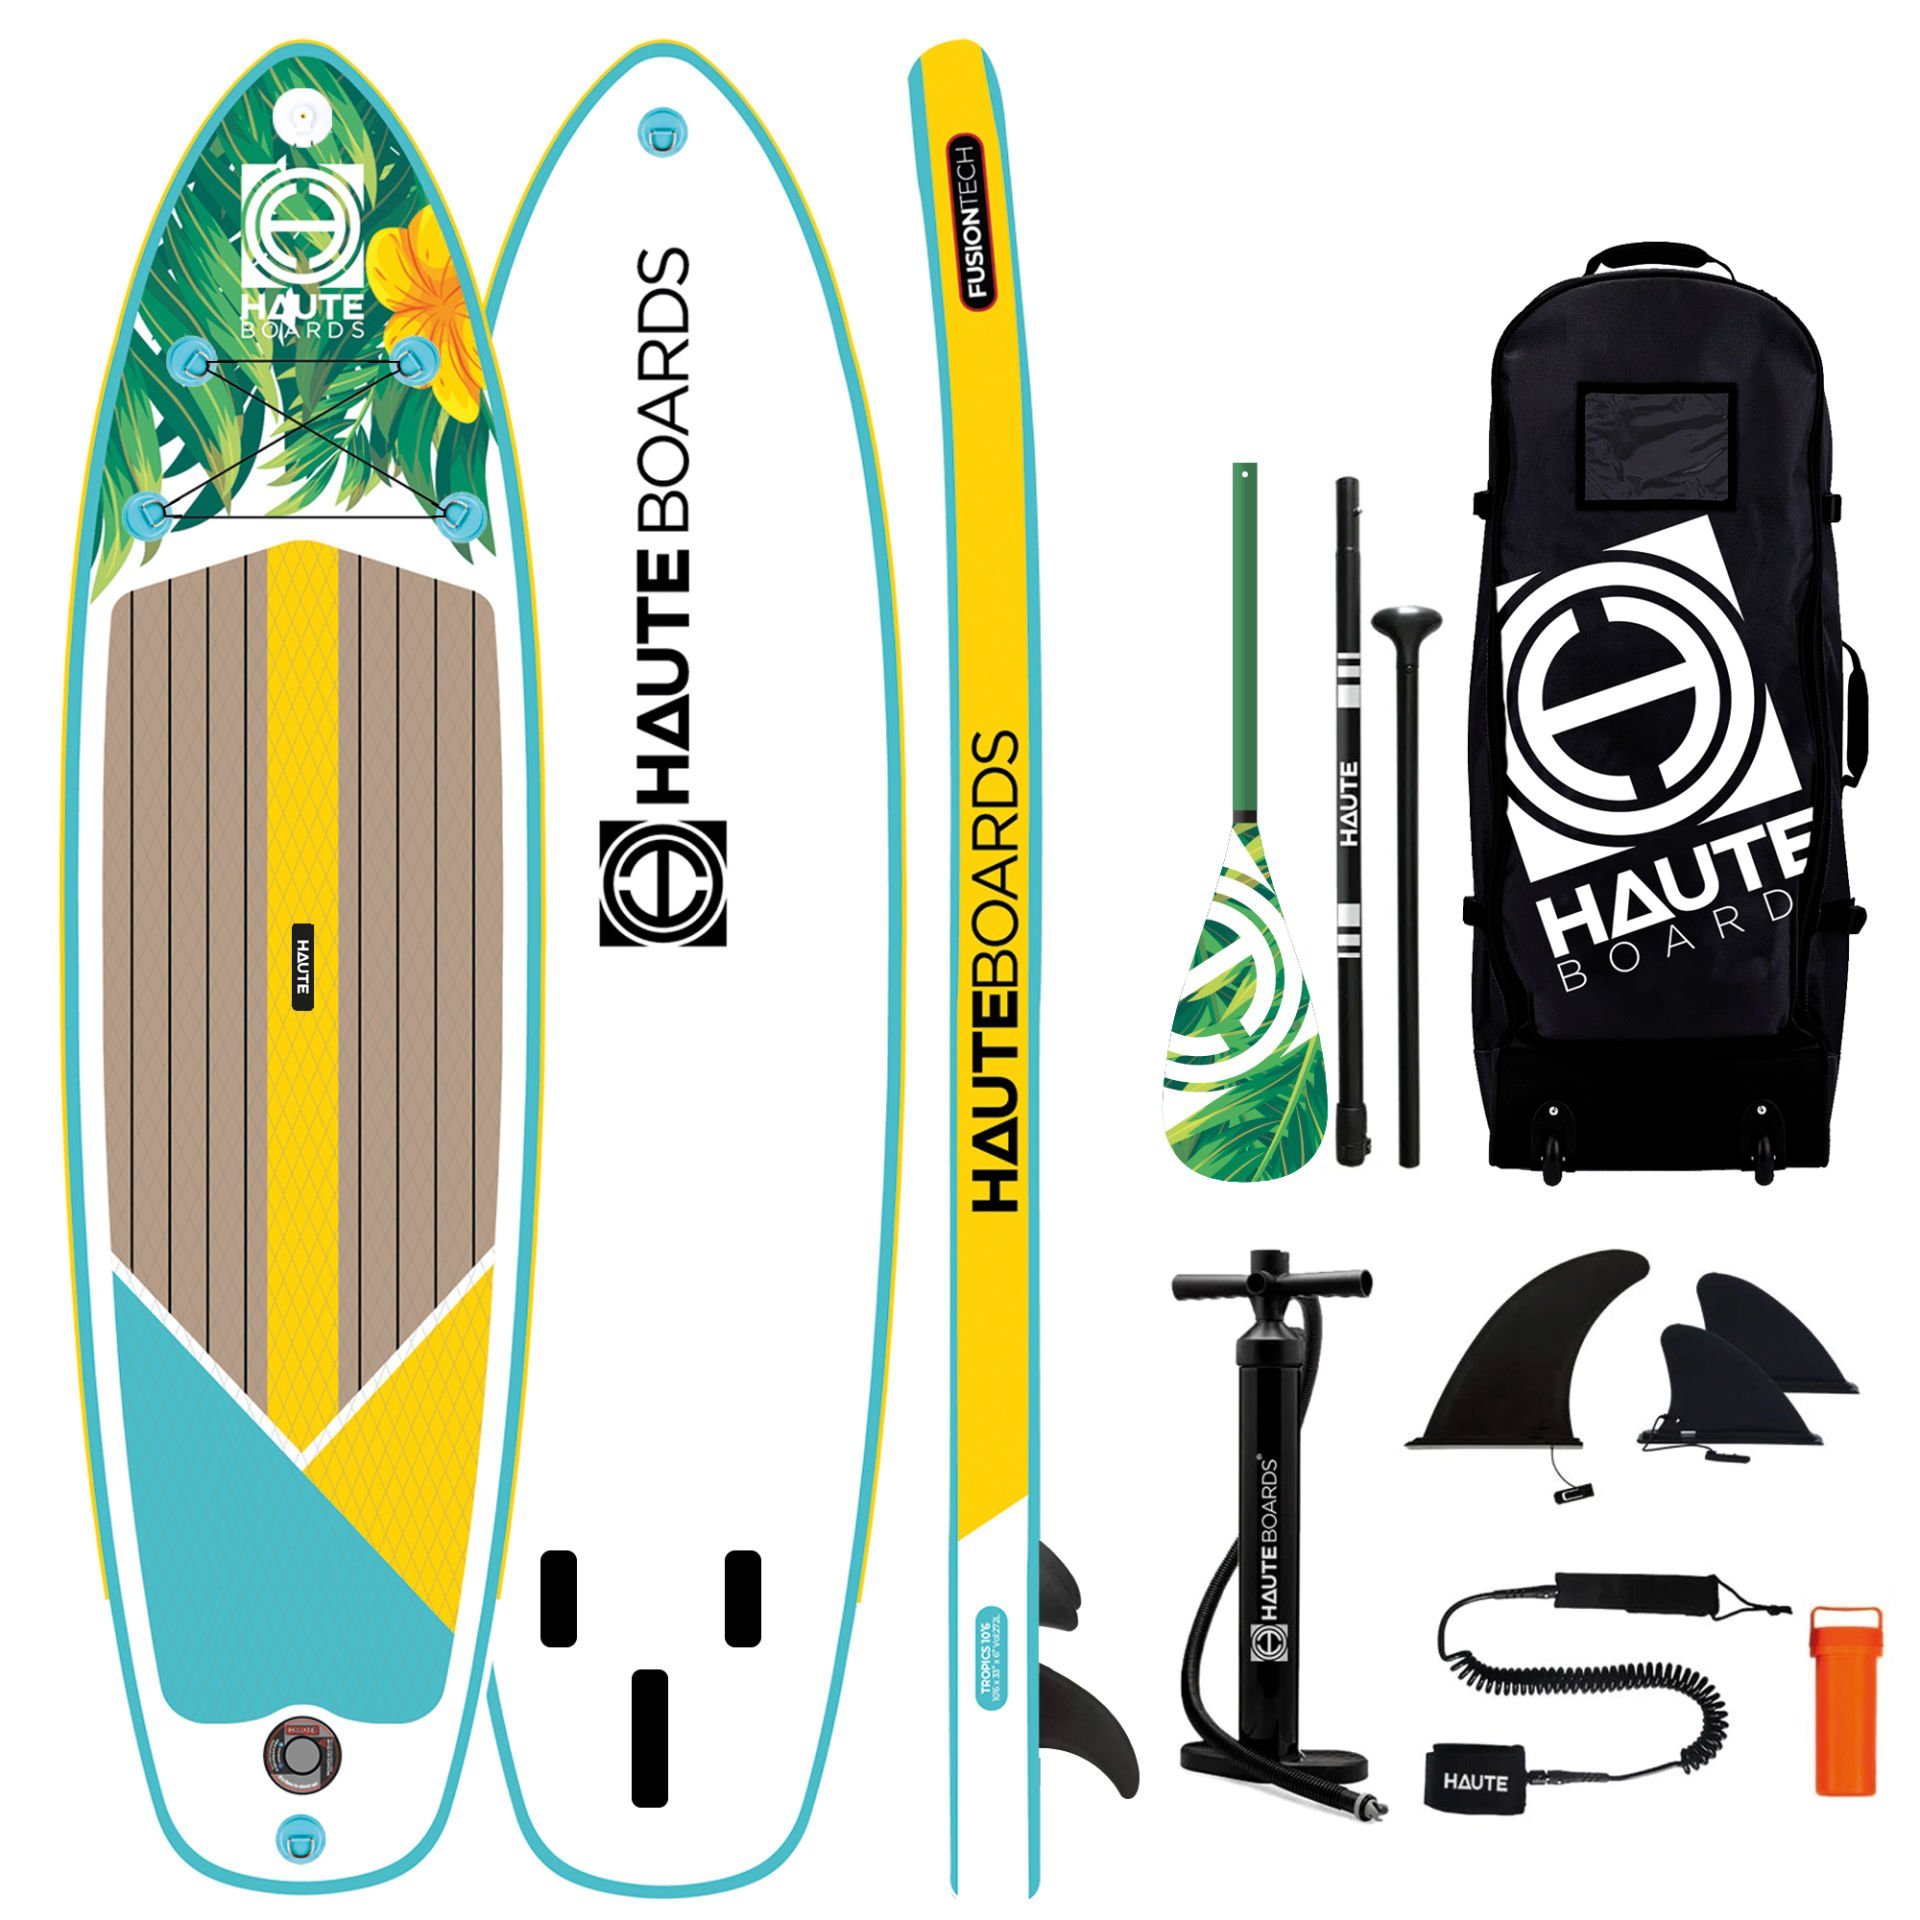 Tropics 10'6 Sarı Şişme Sup Paddle Board (Kürek Sörfü) - Full Paket